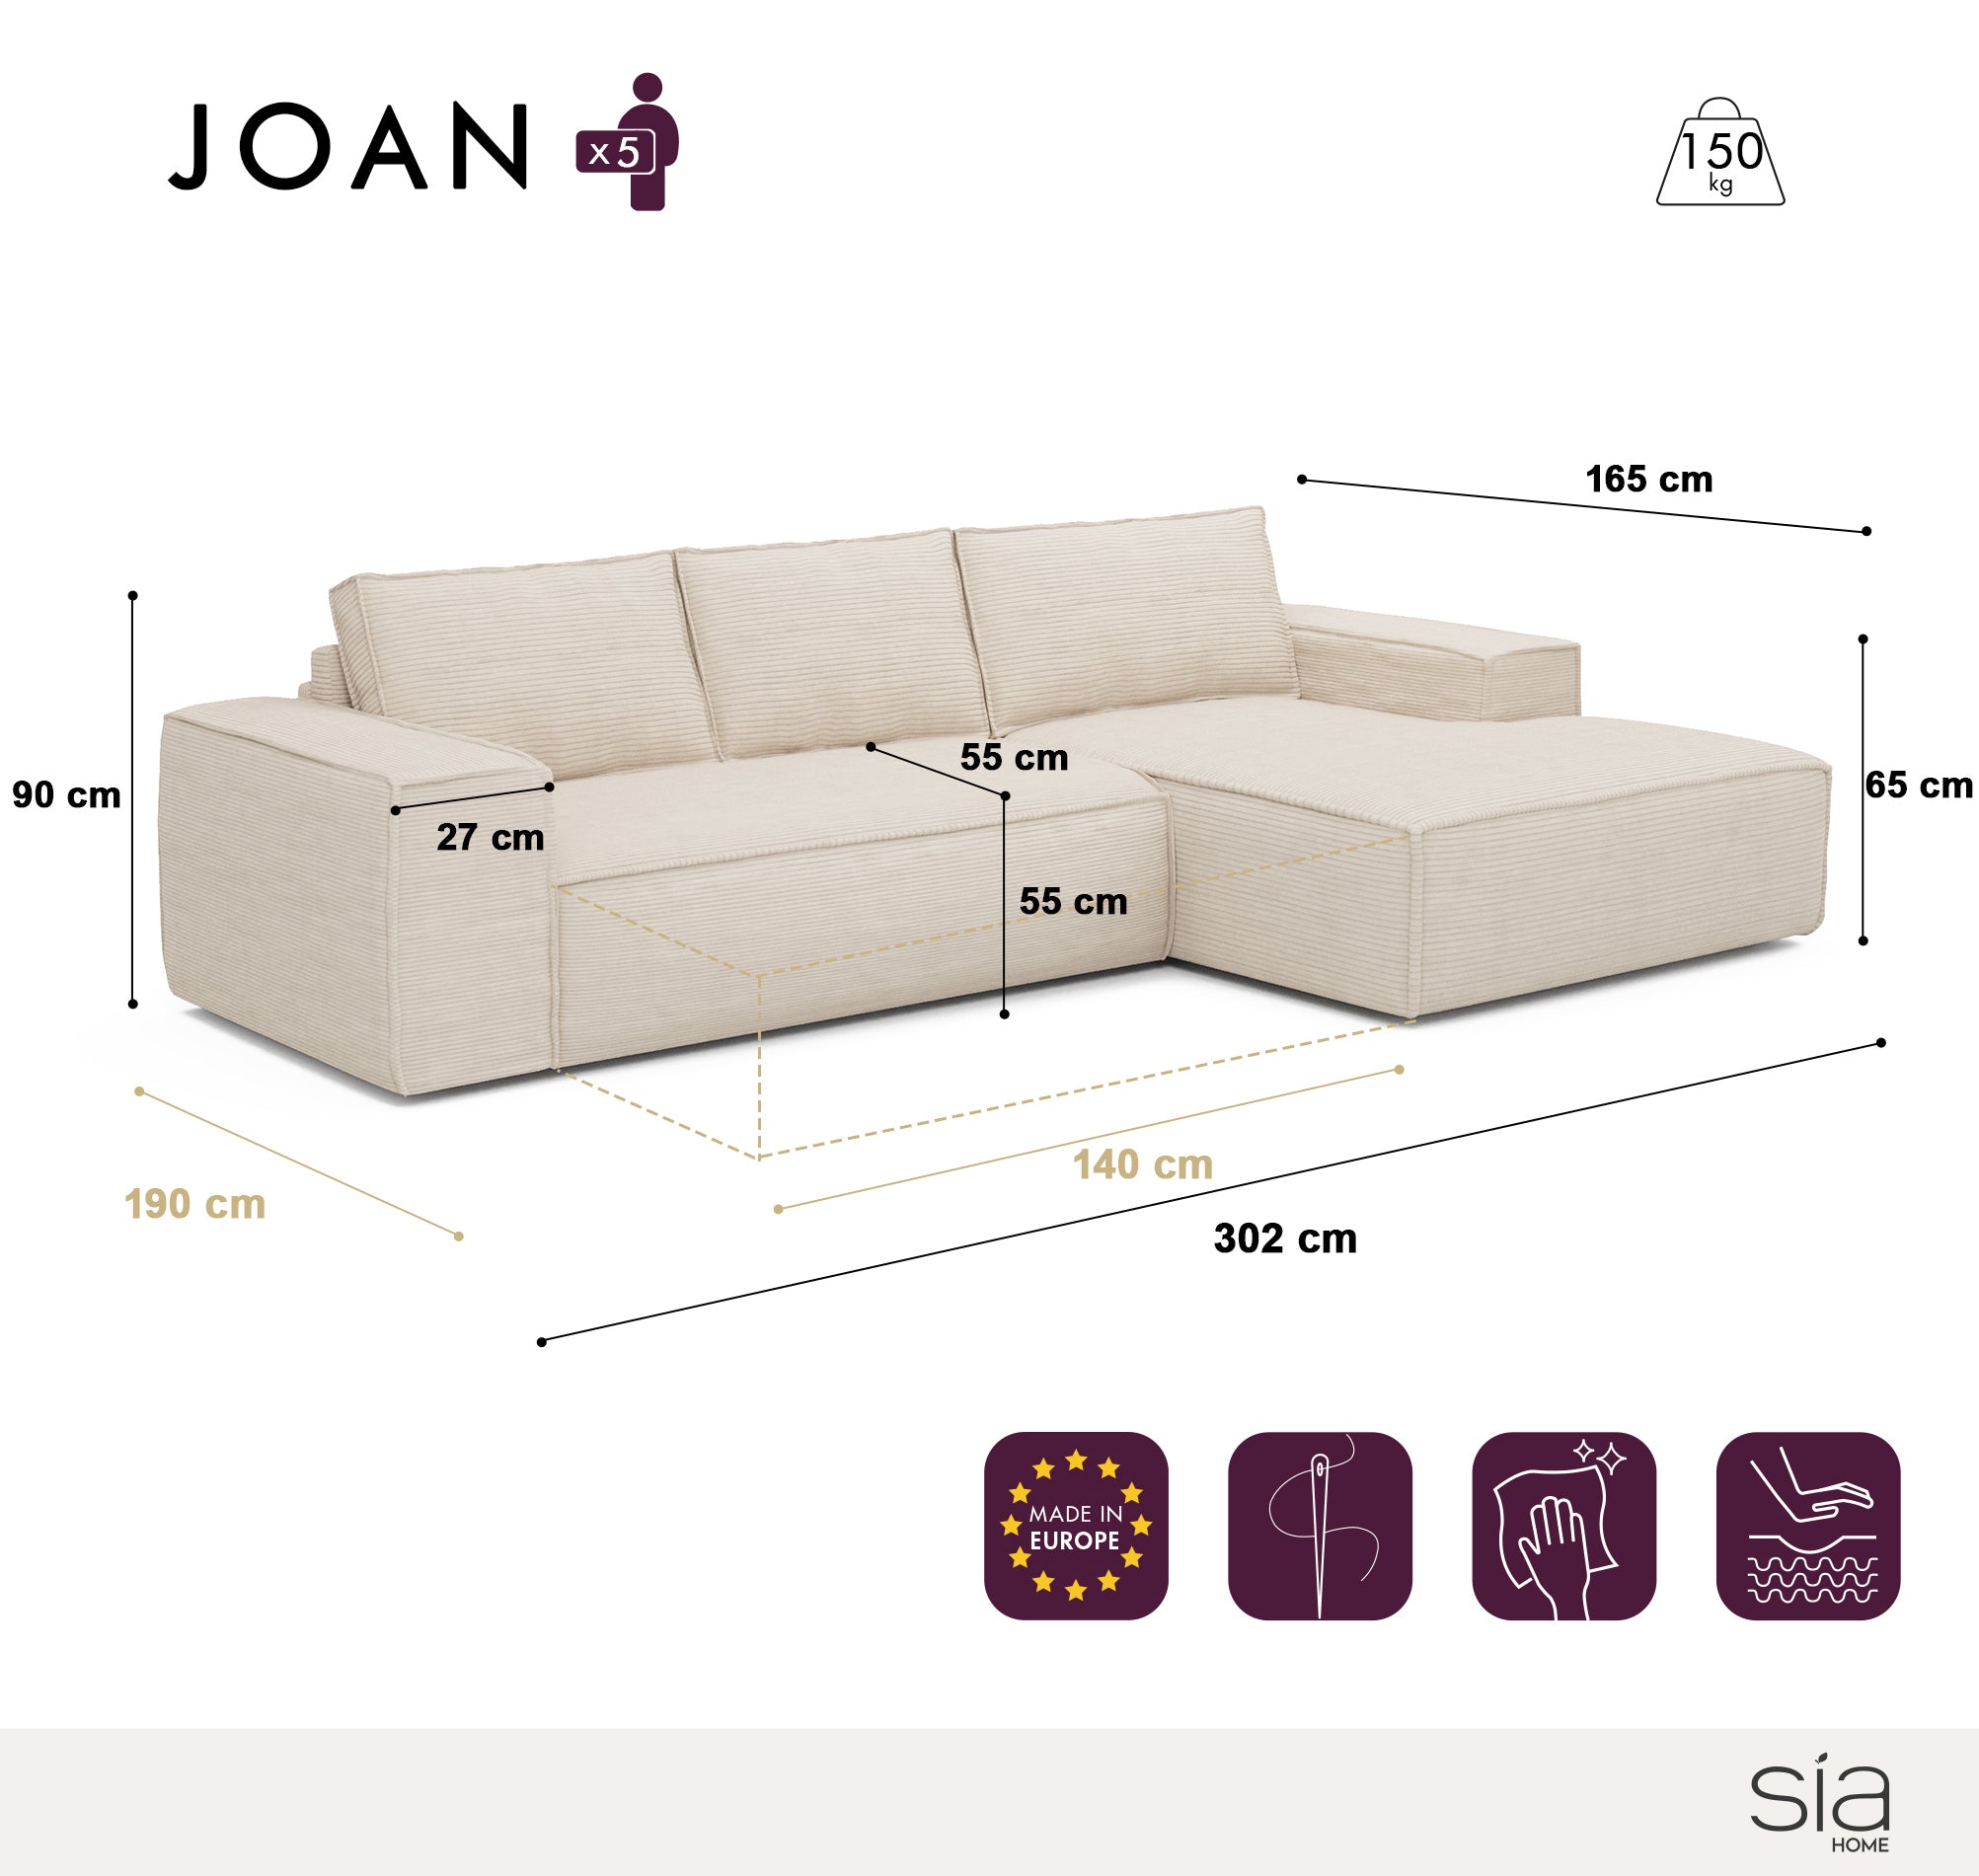 Canapé Convertible d'Angle Droit Joan